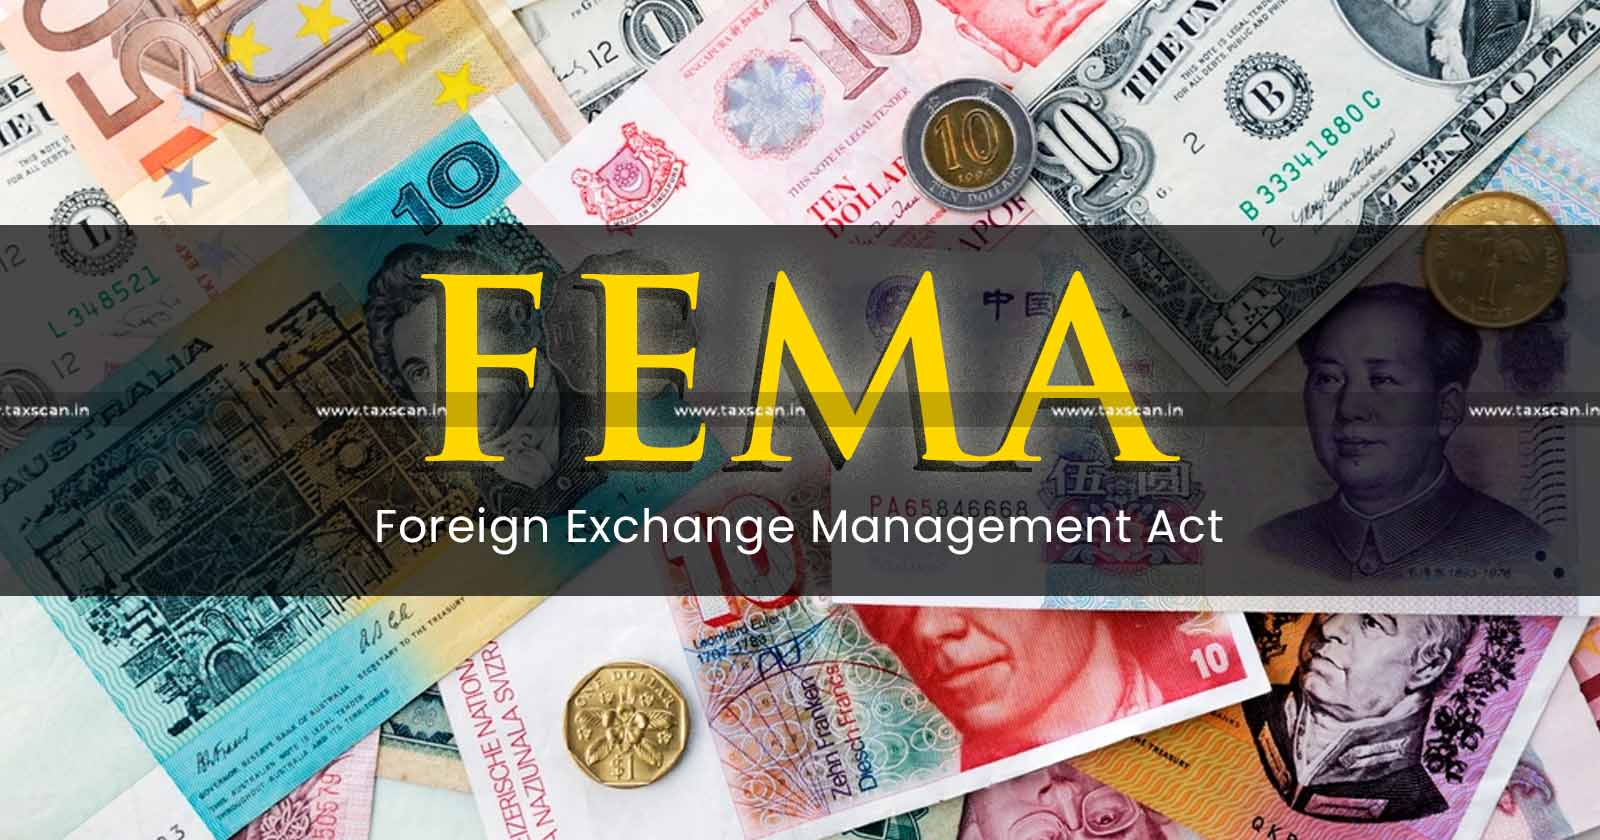 Panama Paper Leaks Case - ED attaches Assets - FEMA Provisions - TAXSCAN